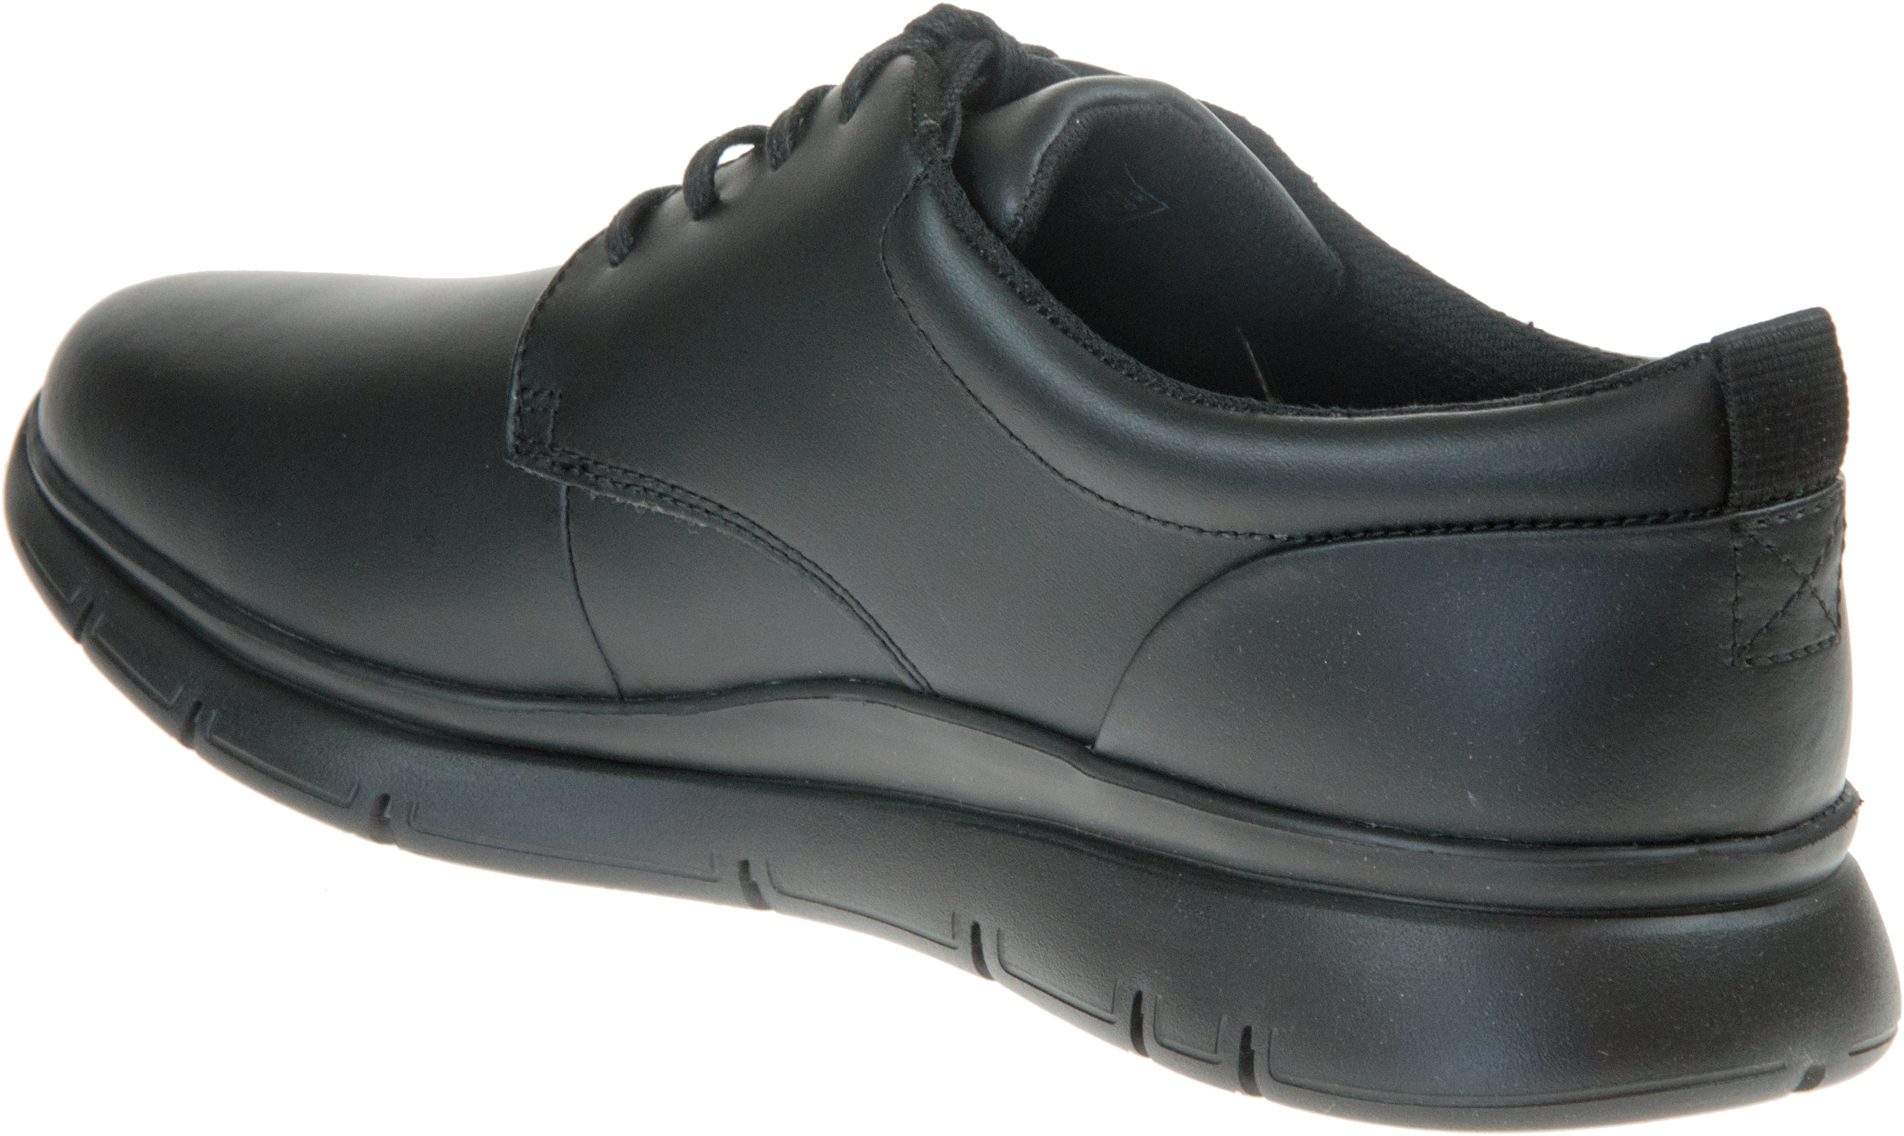 Clarks LT Tie Black Leather 26166844 - Formal Shoes - Humphries Shoes